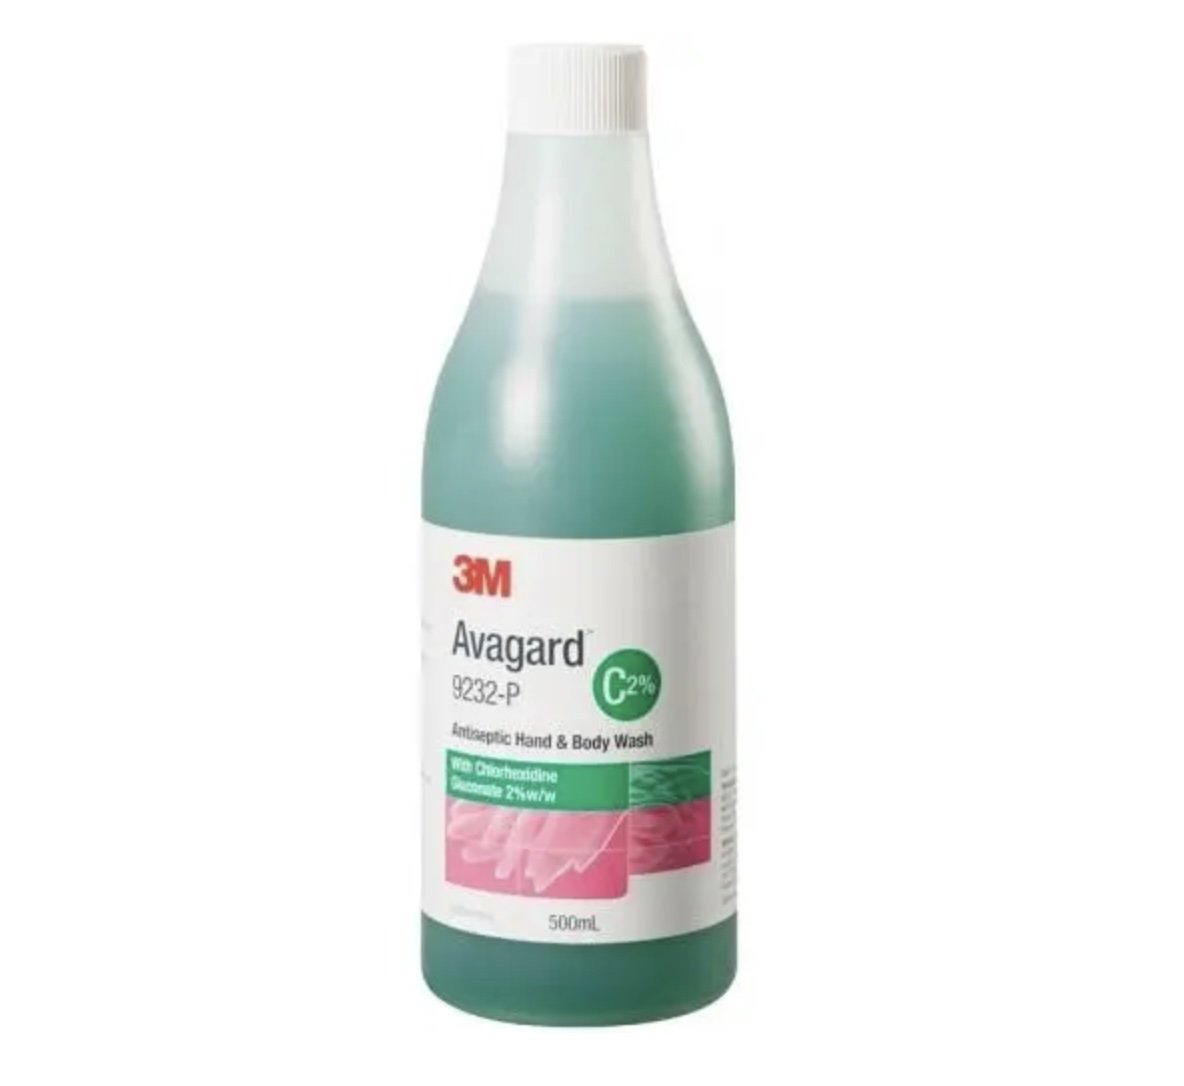 Avagard Handscrub With Chlorhexidine Gluconate 4% 500mL, Each